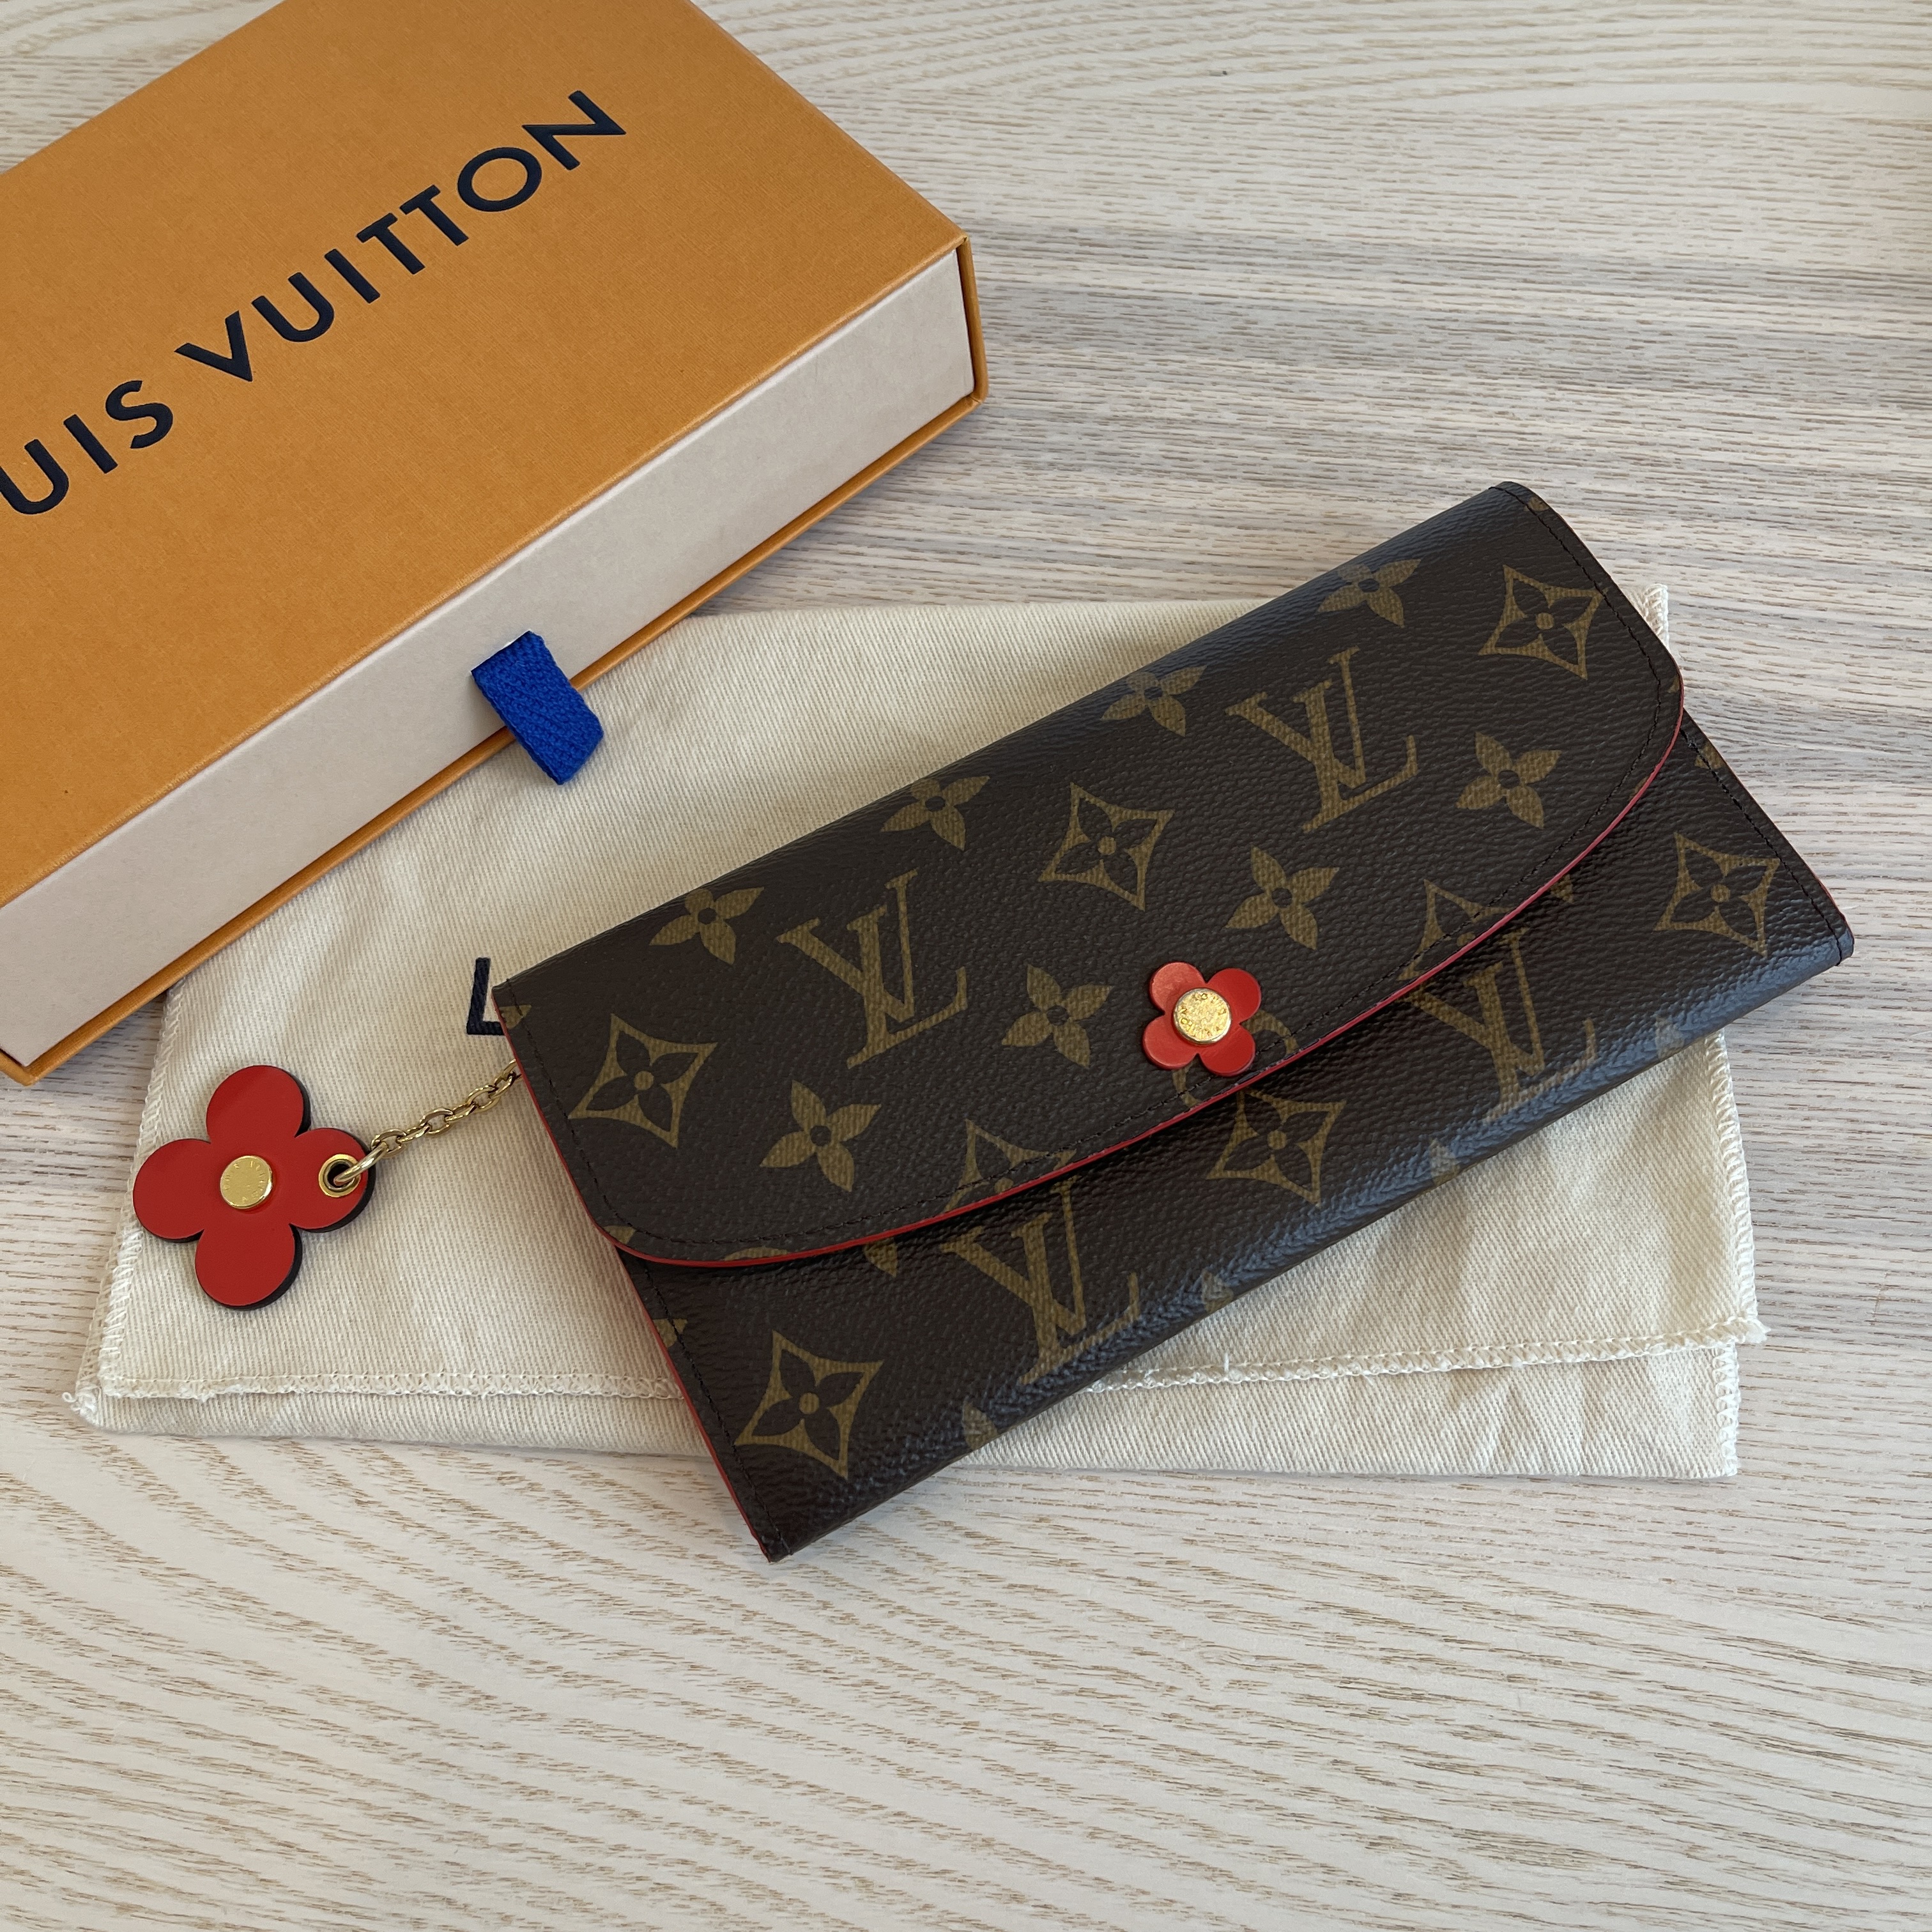 Louis Vuitton Emilie Wallet Limited Edition Bloom Flower Monogram